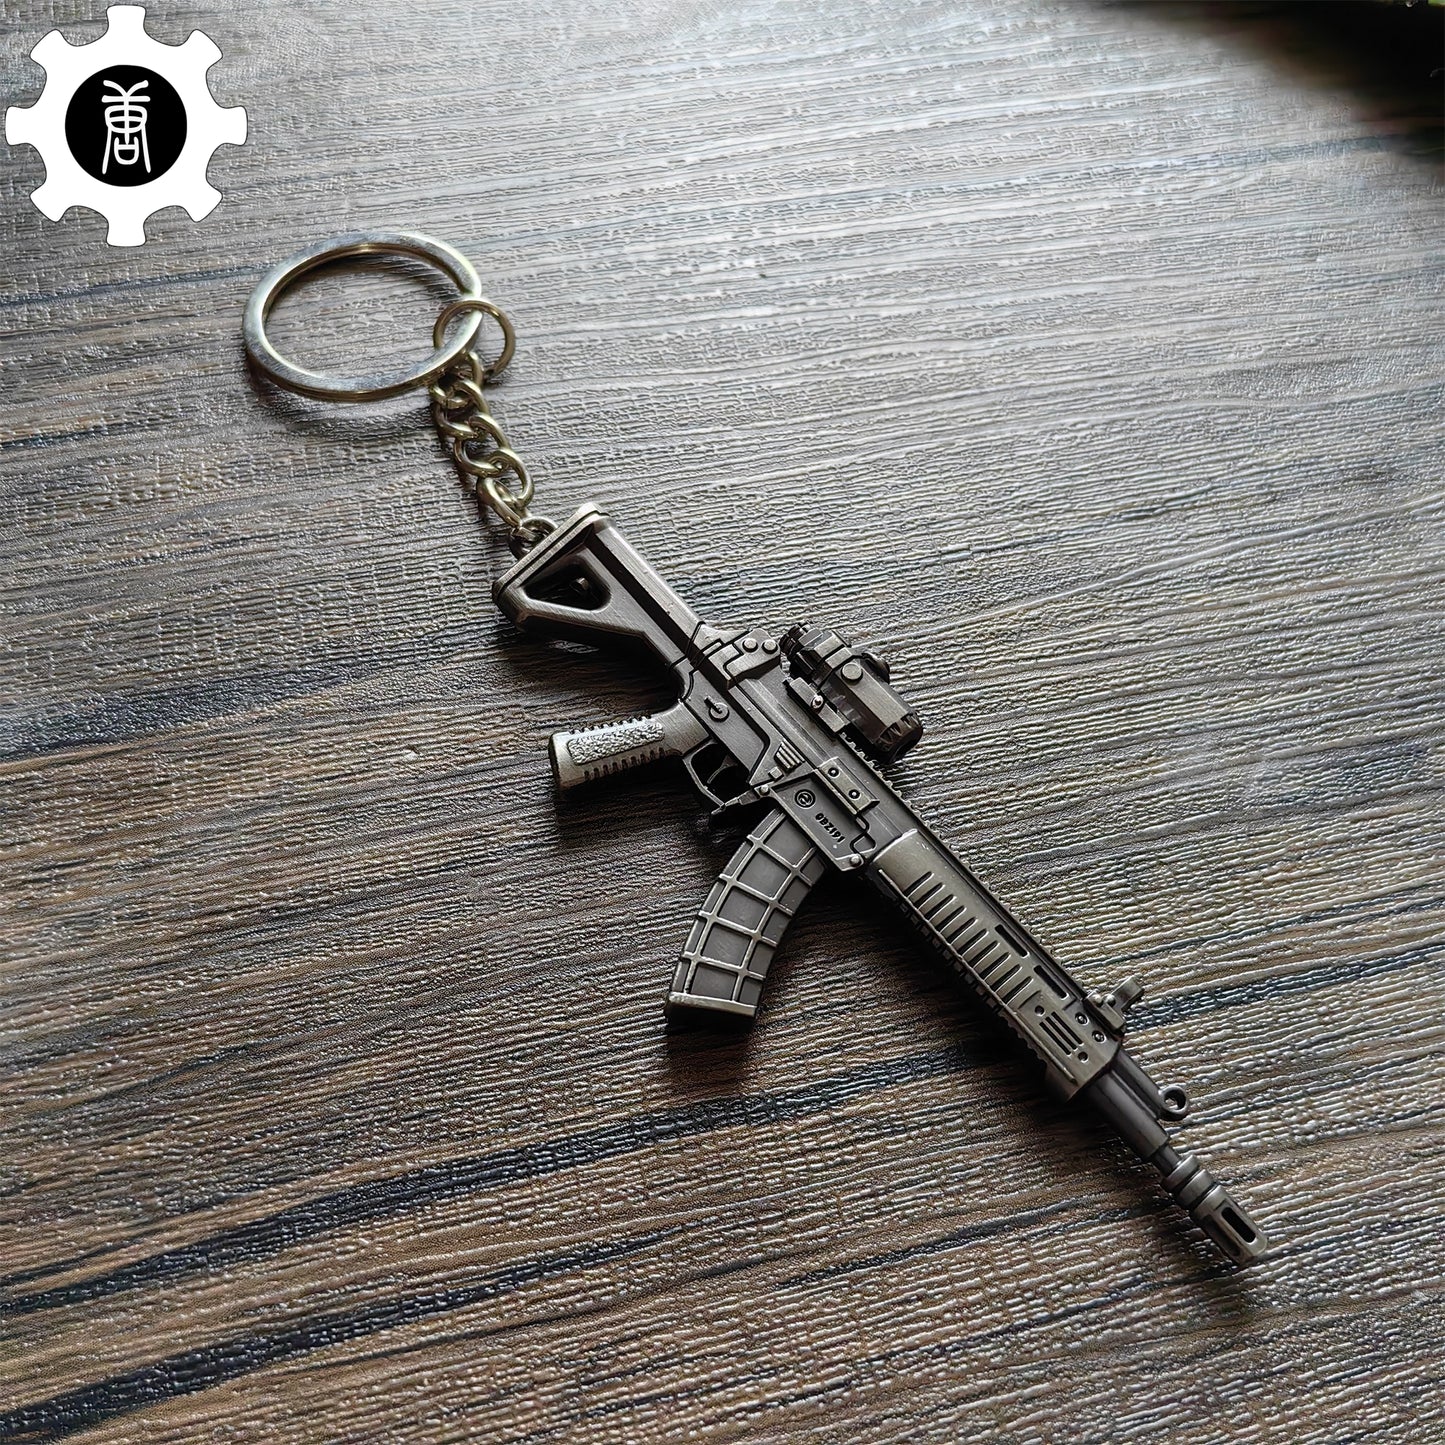 Tiny QBZ-191 Assault Rifle Metal Keychain